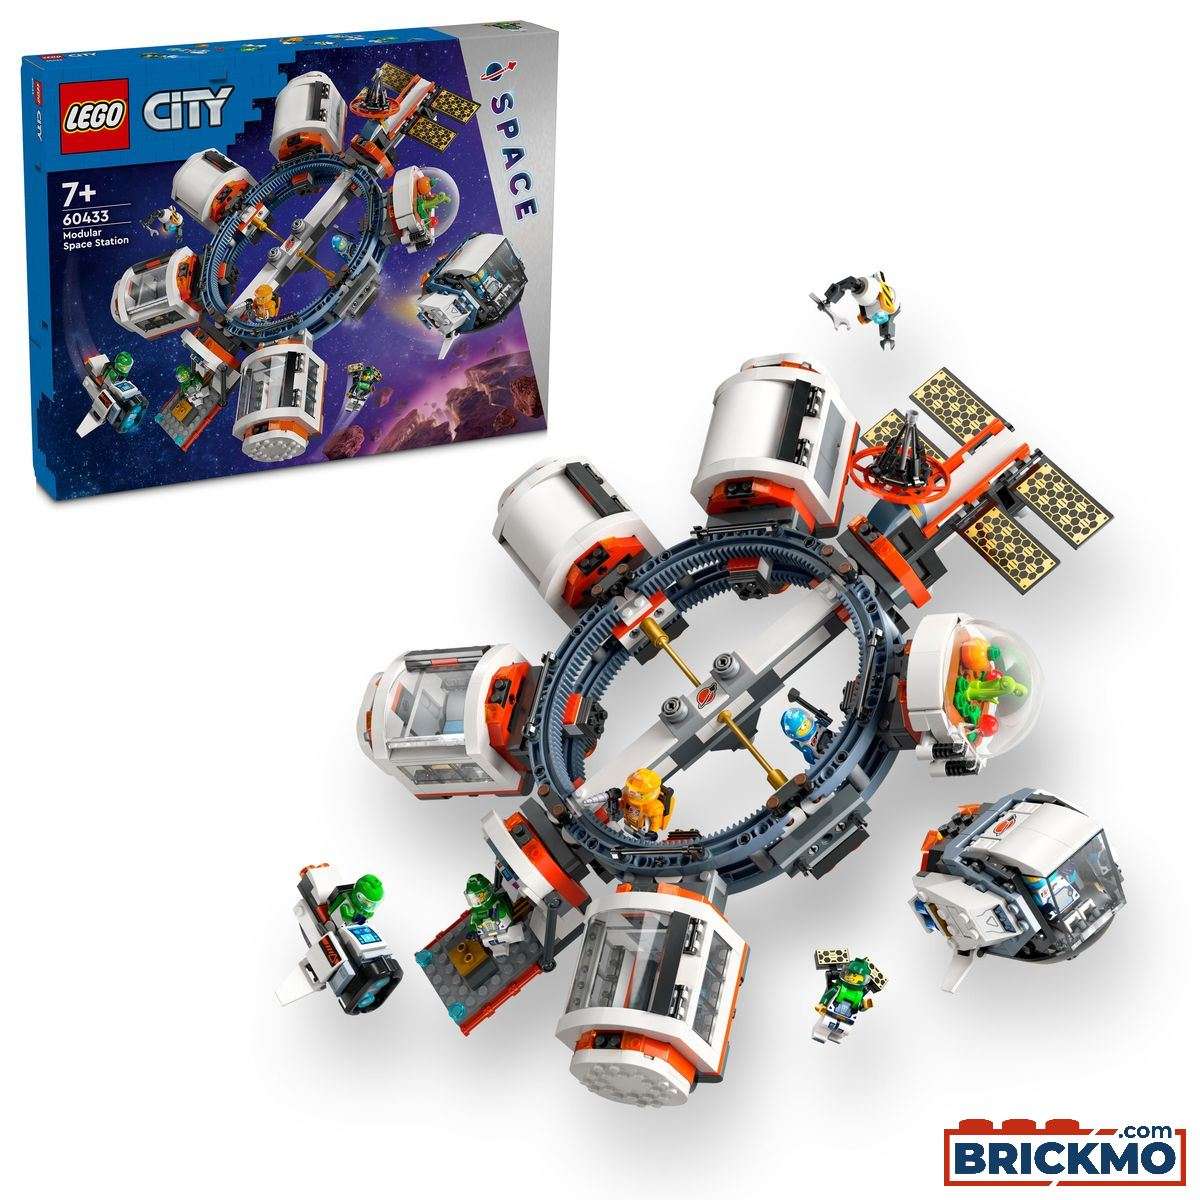 LEGO City 60433 Modular Space Station 60433